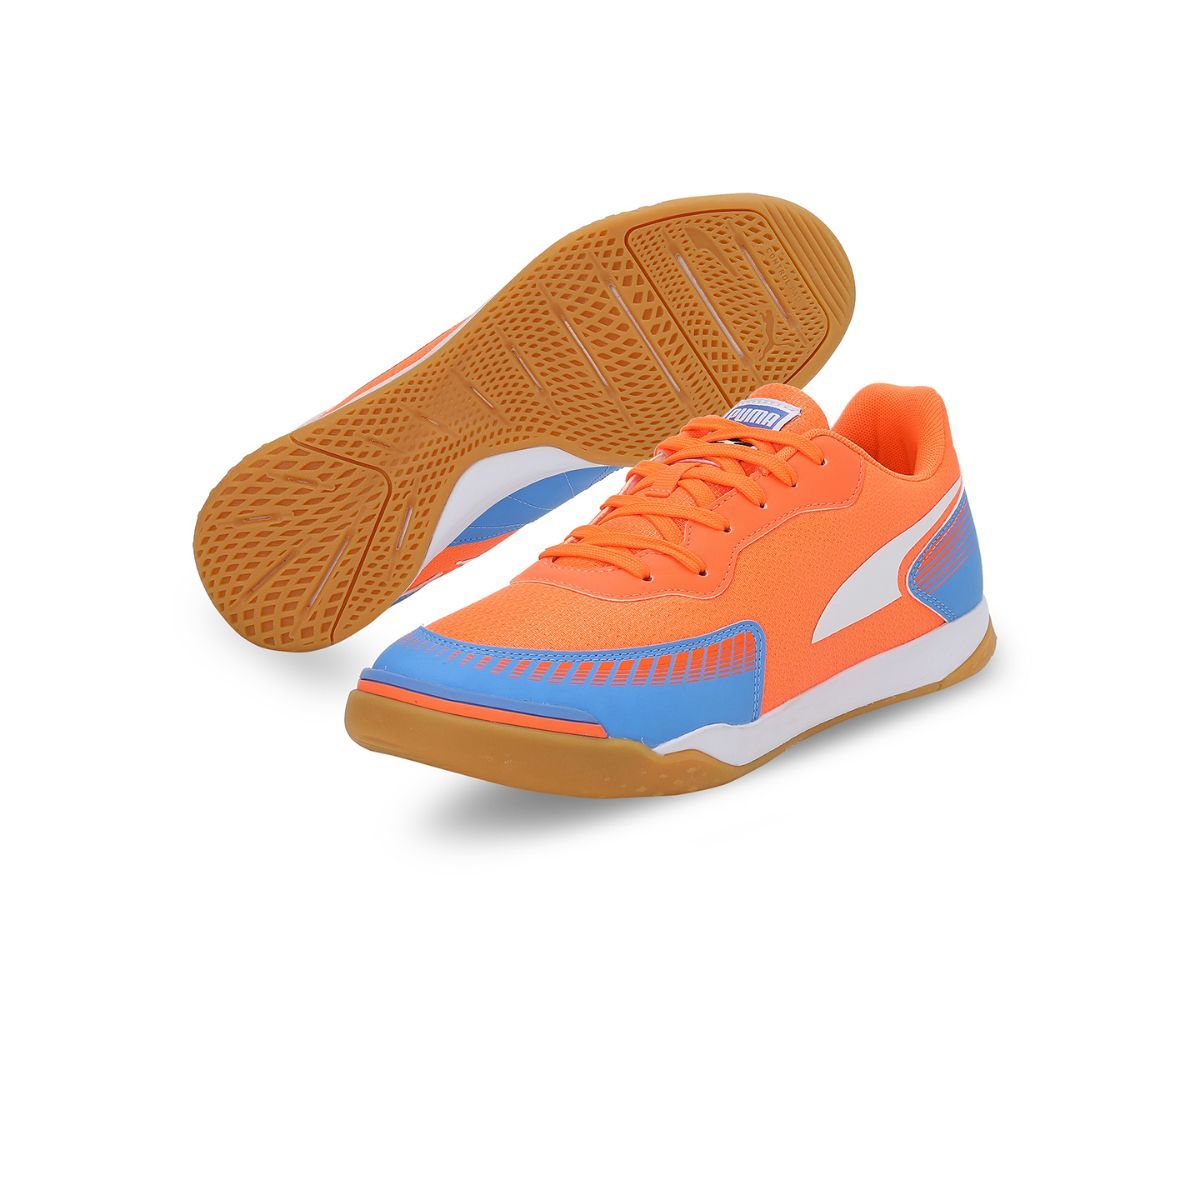 Puma PRESSING III Unisex Orange Badminton Shoes: Buy Puma PRESSING III ...